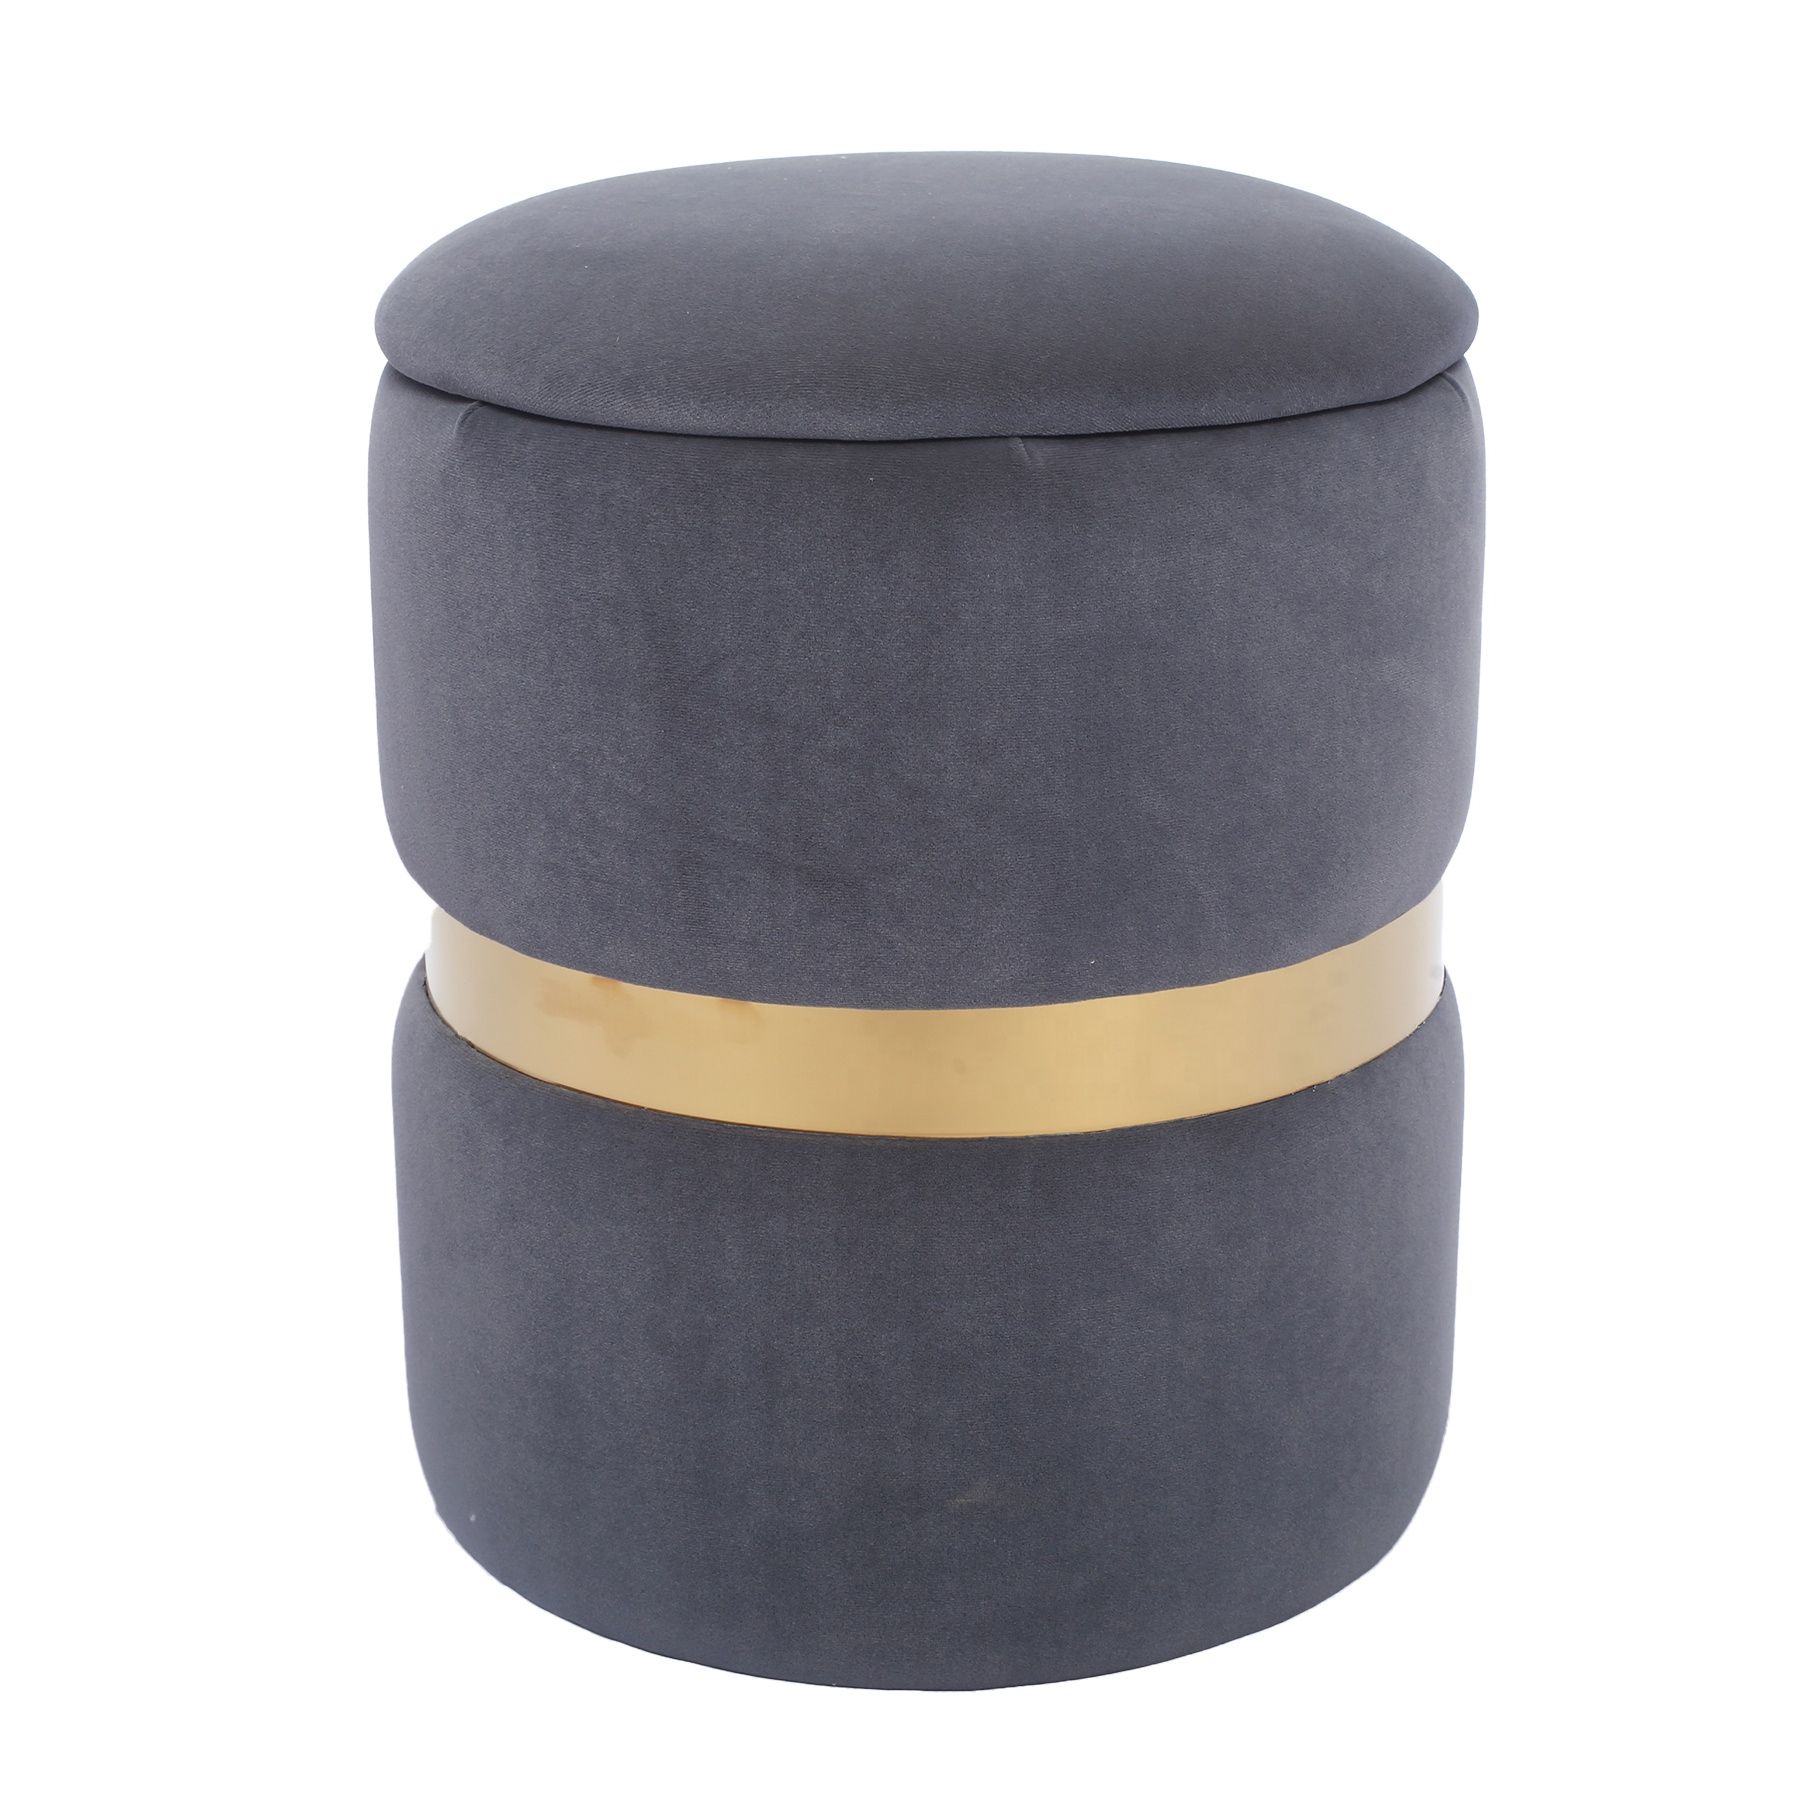 Velvet Fabric Round Storage Ottoman Gray – Buy Storage Ottoman,ottoman Pertaining To Most Recent Gray Velvet Ribbed Fabric Round Storage Ottomans (View 7 of 10)